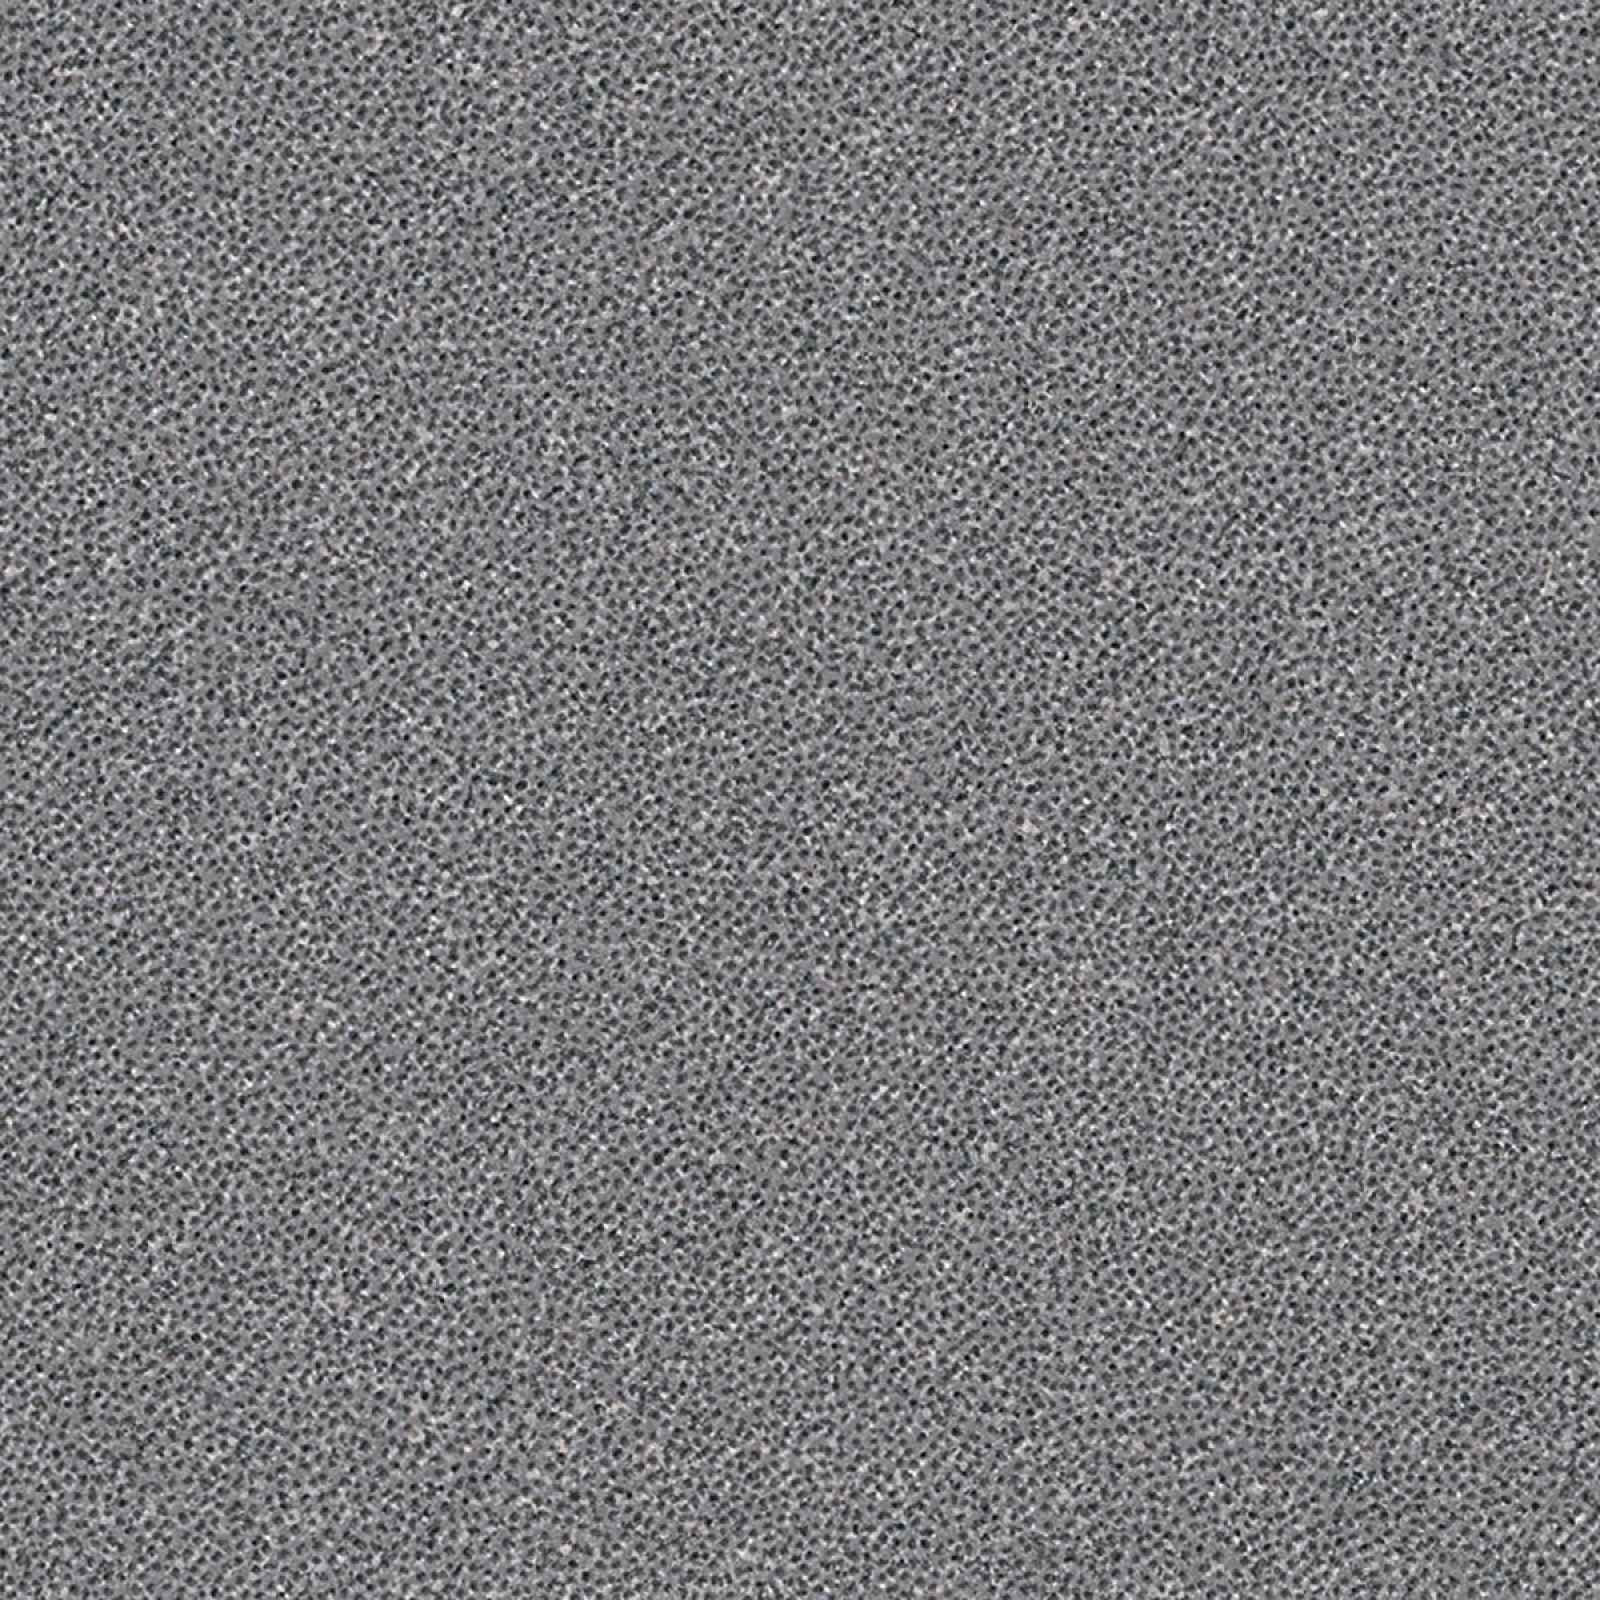 Dlažba Rako Taurus Granit antracitově šedá 30x30 cm protiskluz TRM34065.1